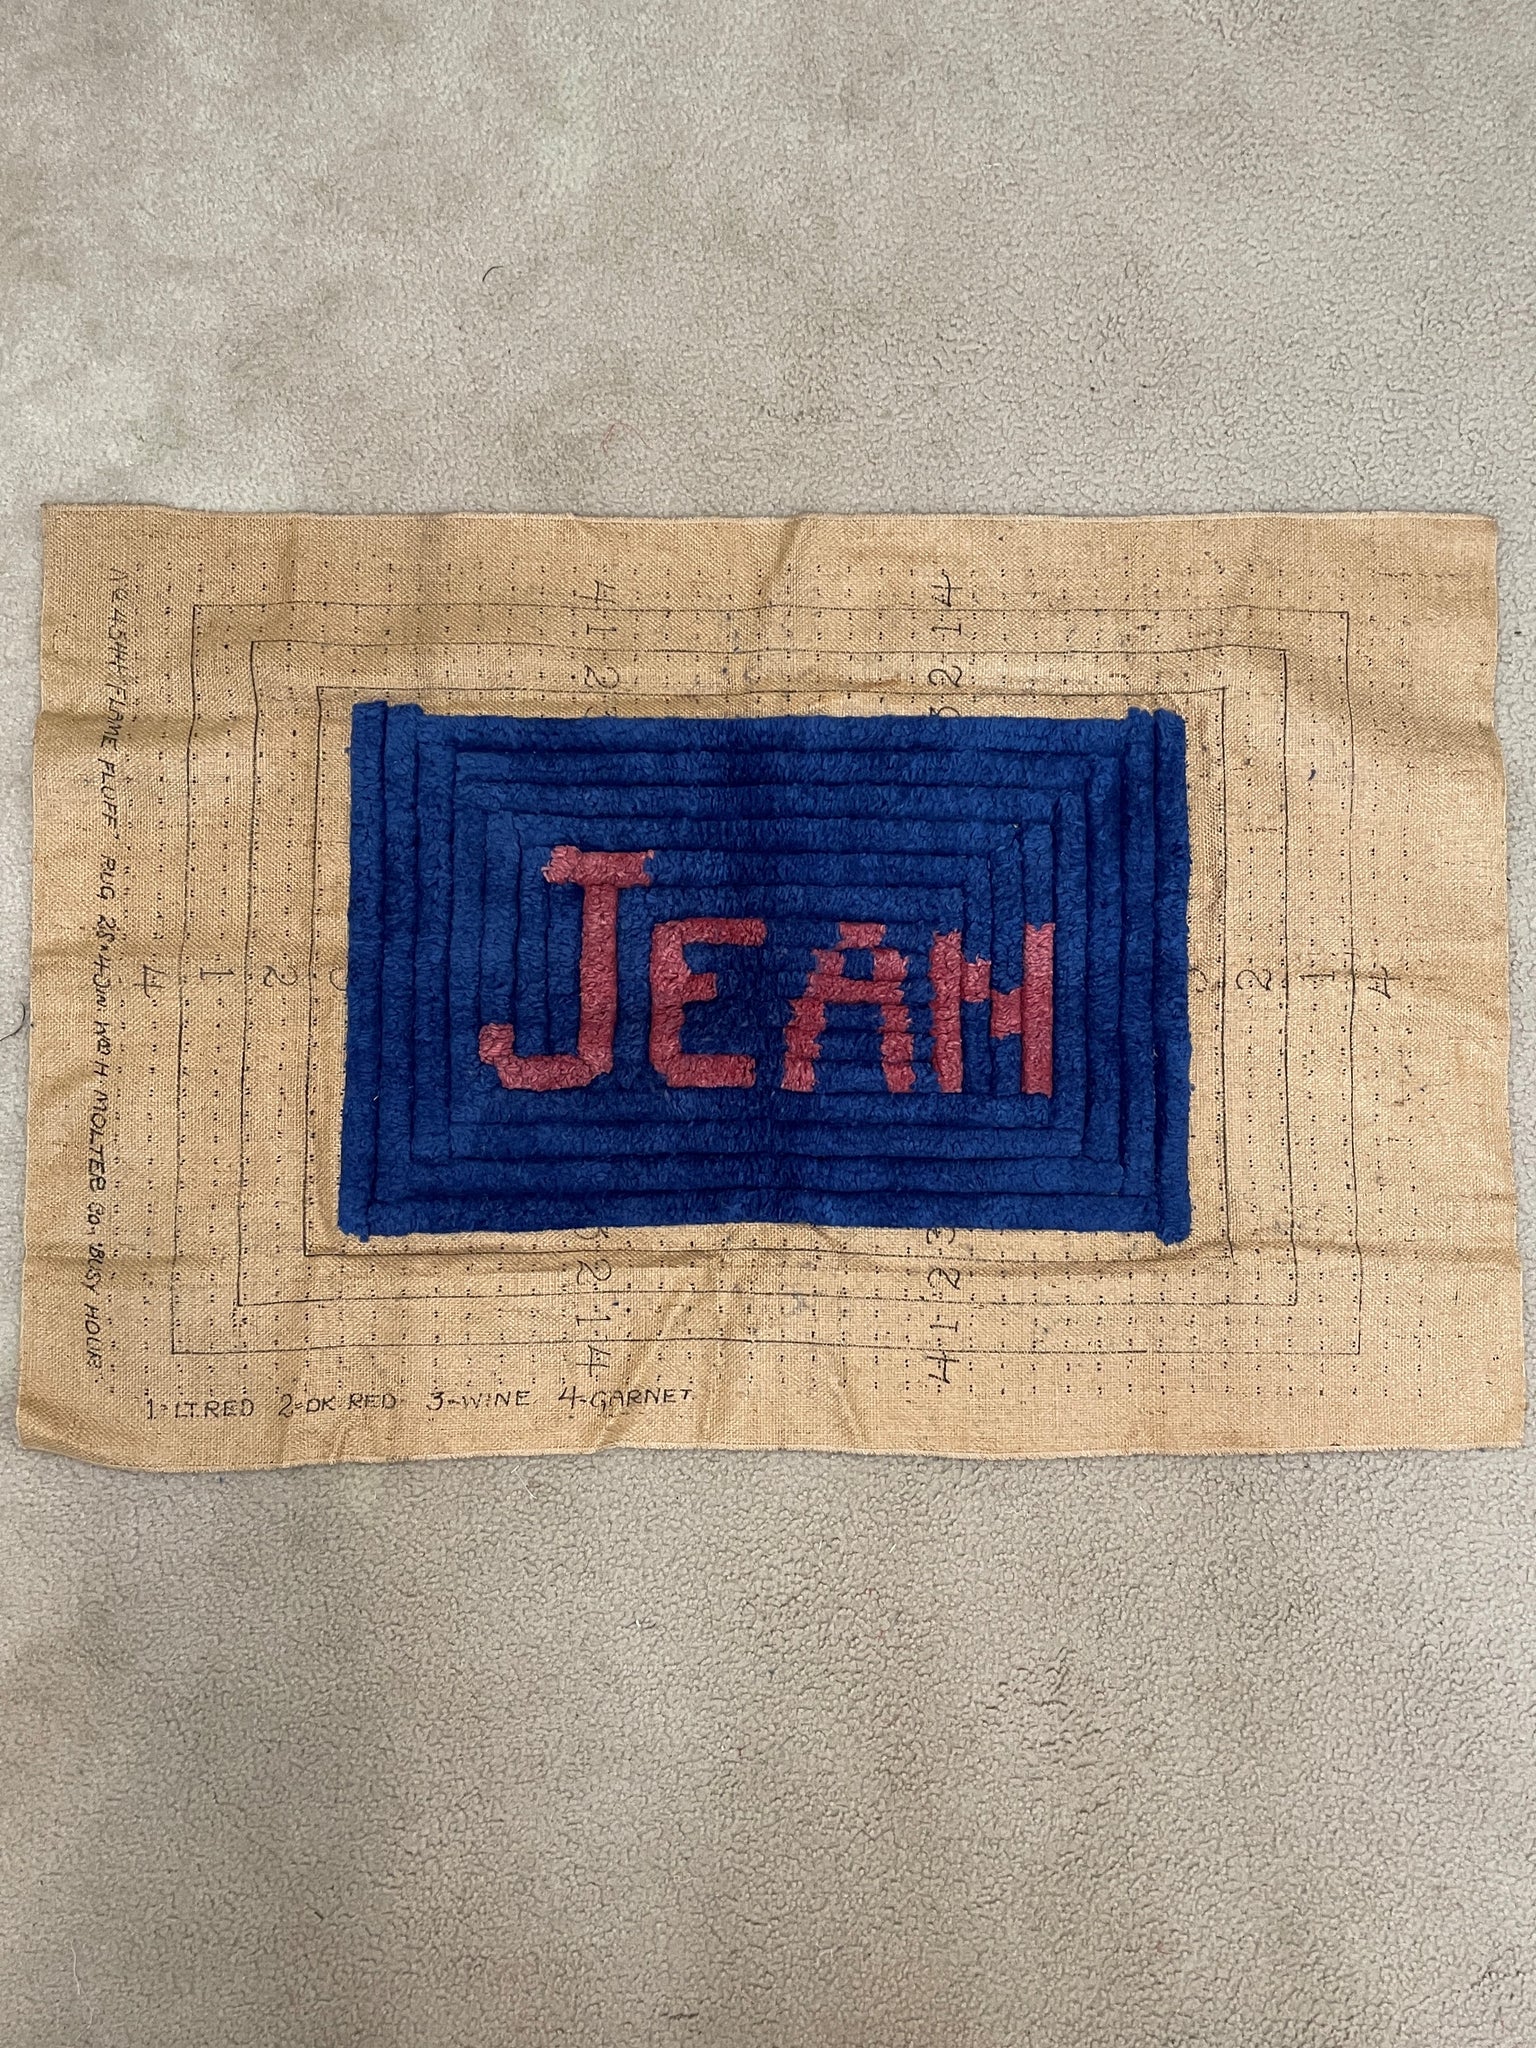 SALE Handmade Rug Vintage Abandoned - Burlap with "Jean"